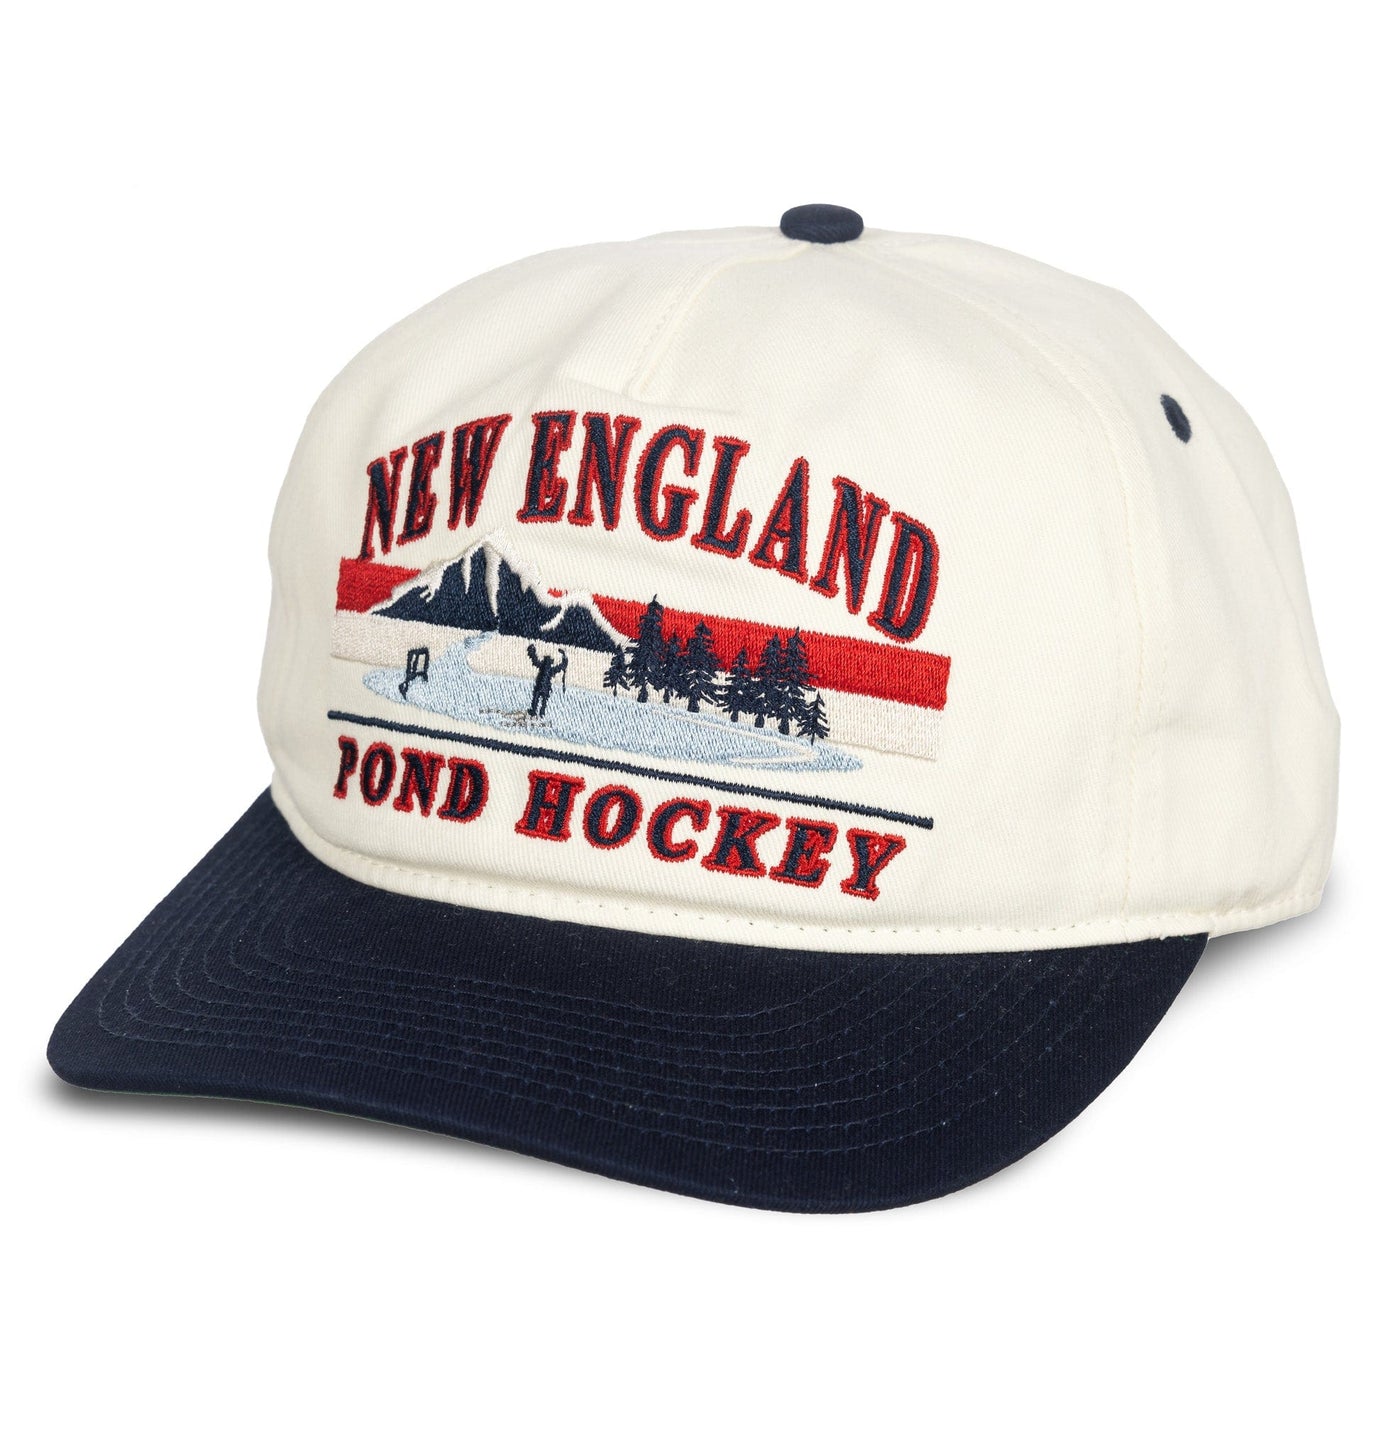 Celly Hockey New England Pond Hockey Snapback Hat - Cream - TheHockeyShop.com